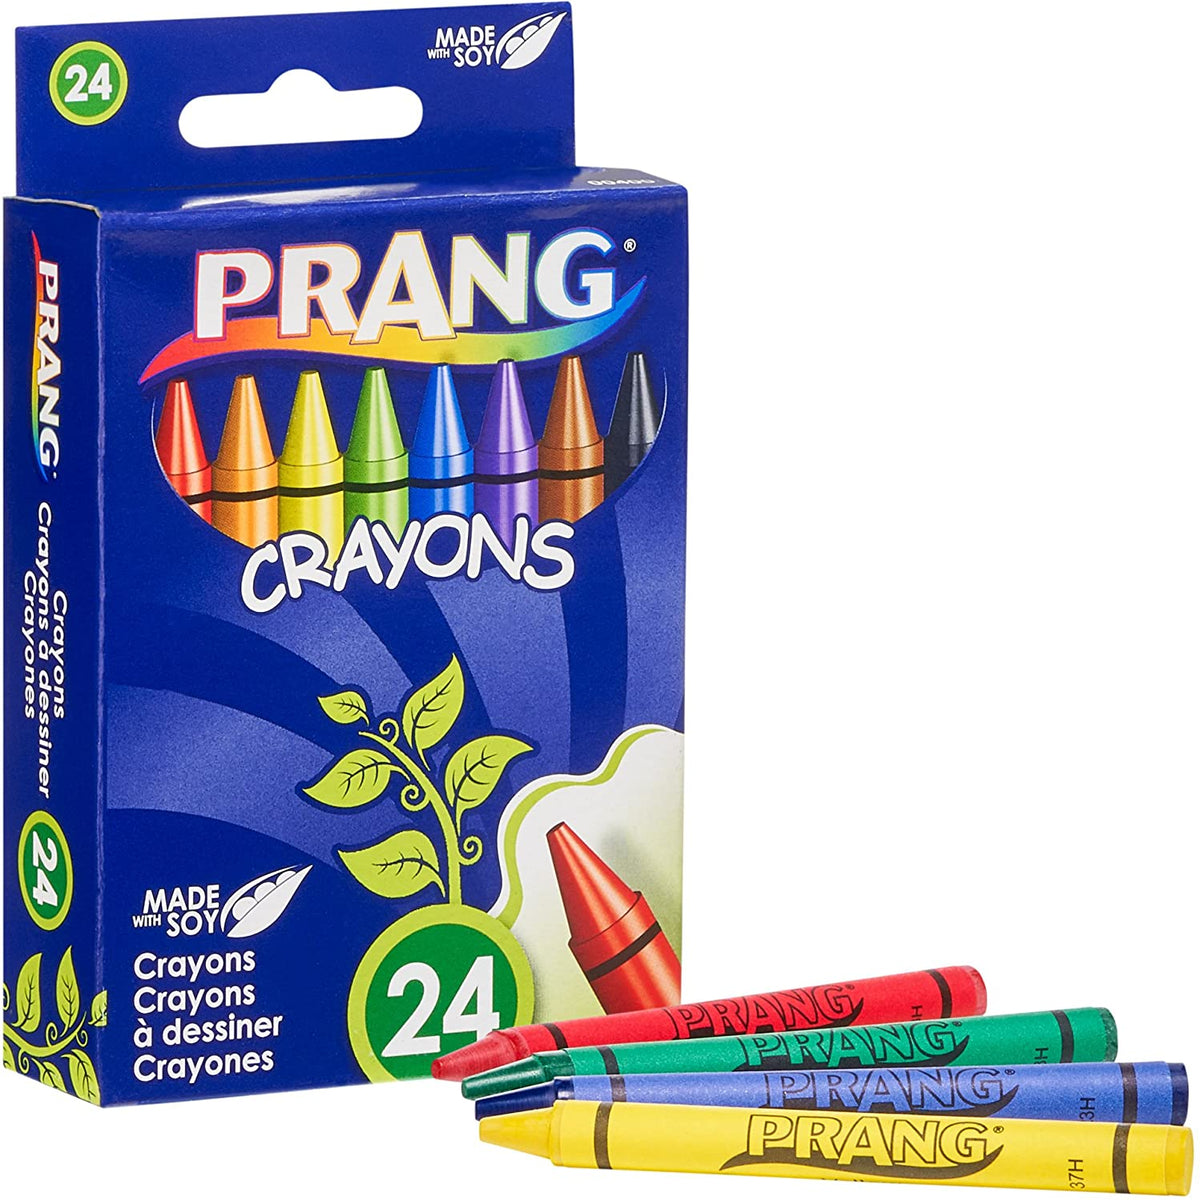 CRAYONS - Crayons